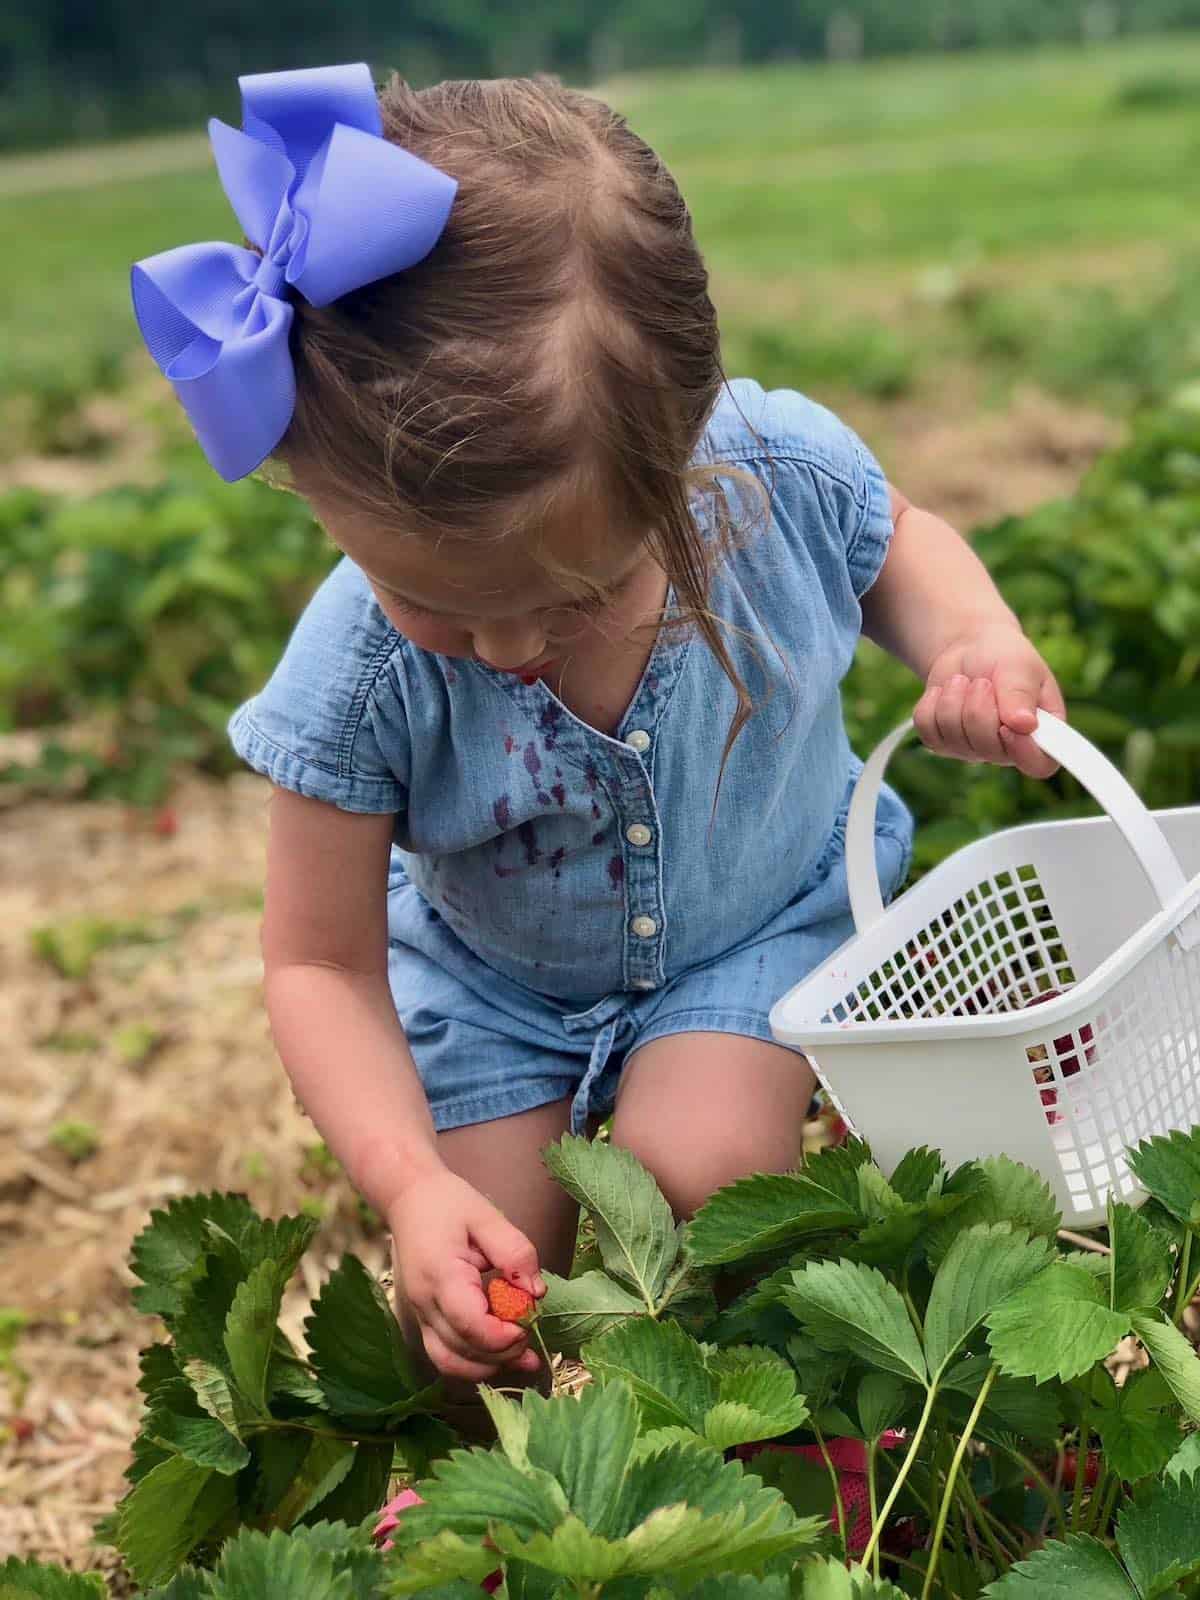 My granddaughter picking strawberries.